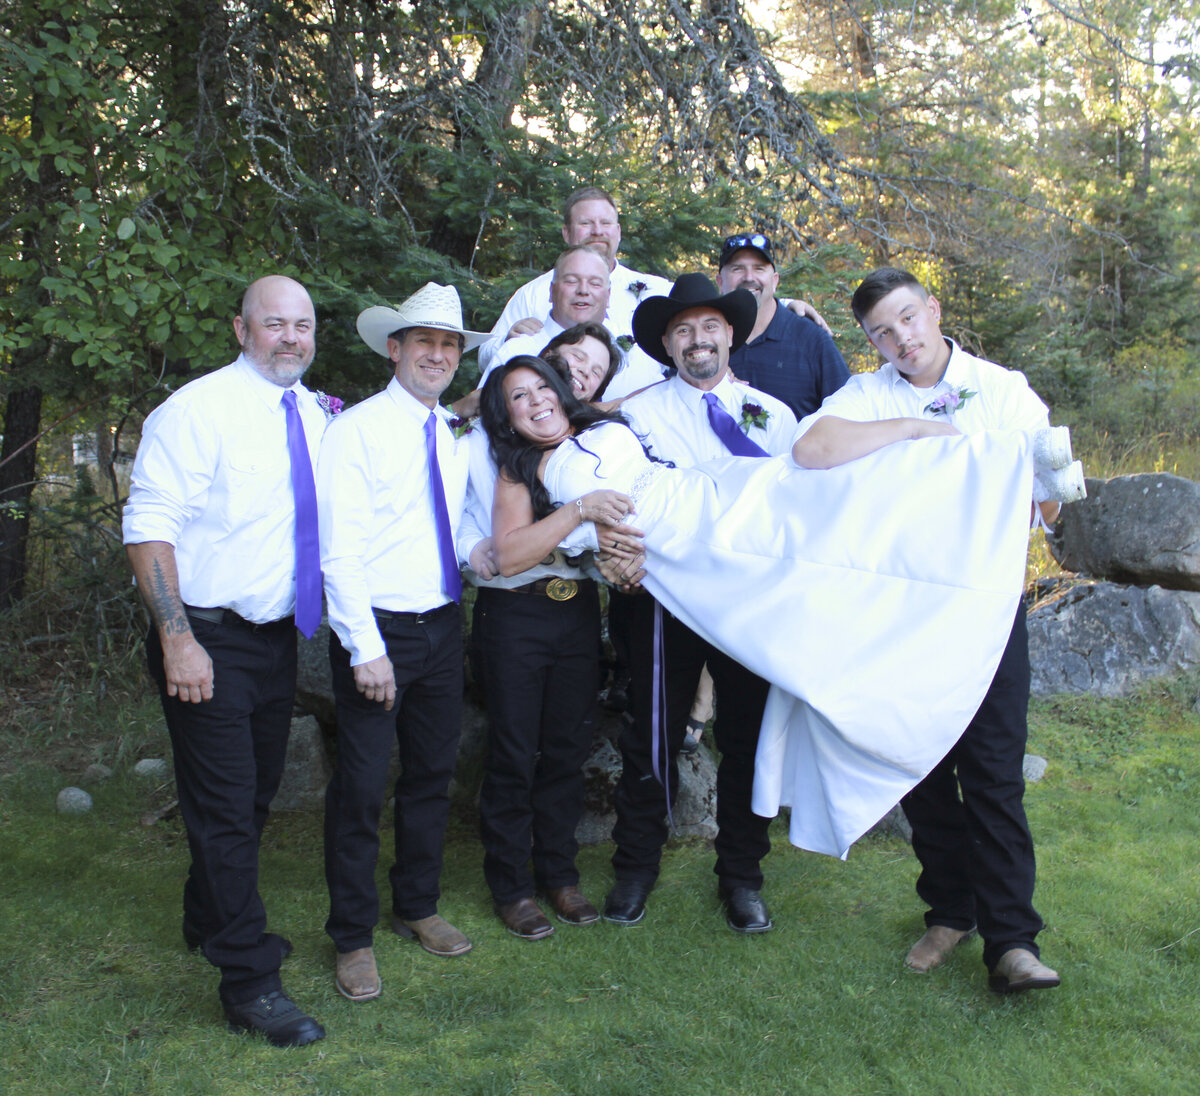 Bayview, Idaho Community Center Wedding reception groom and groomsmen holding the bride